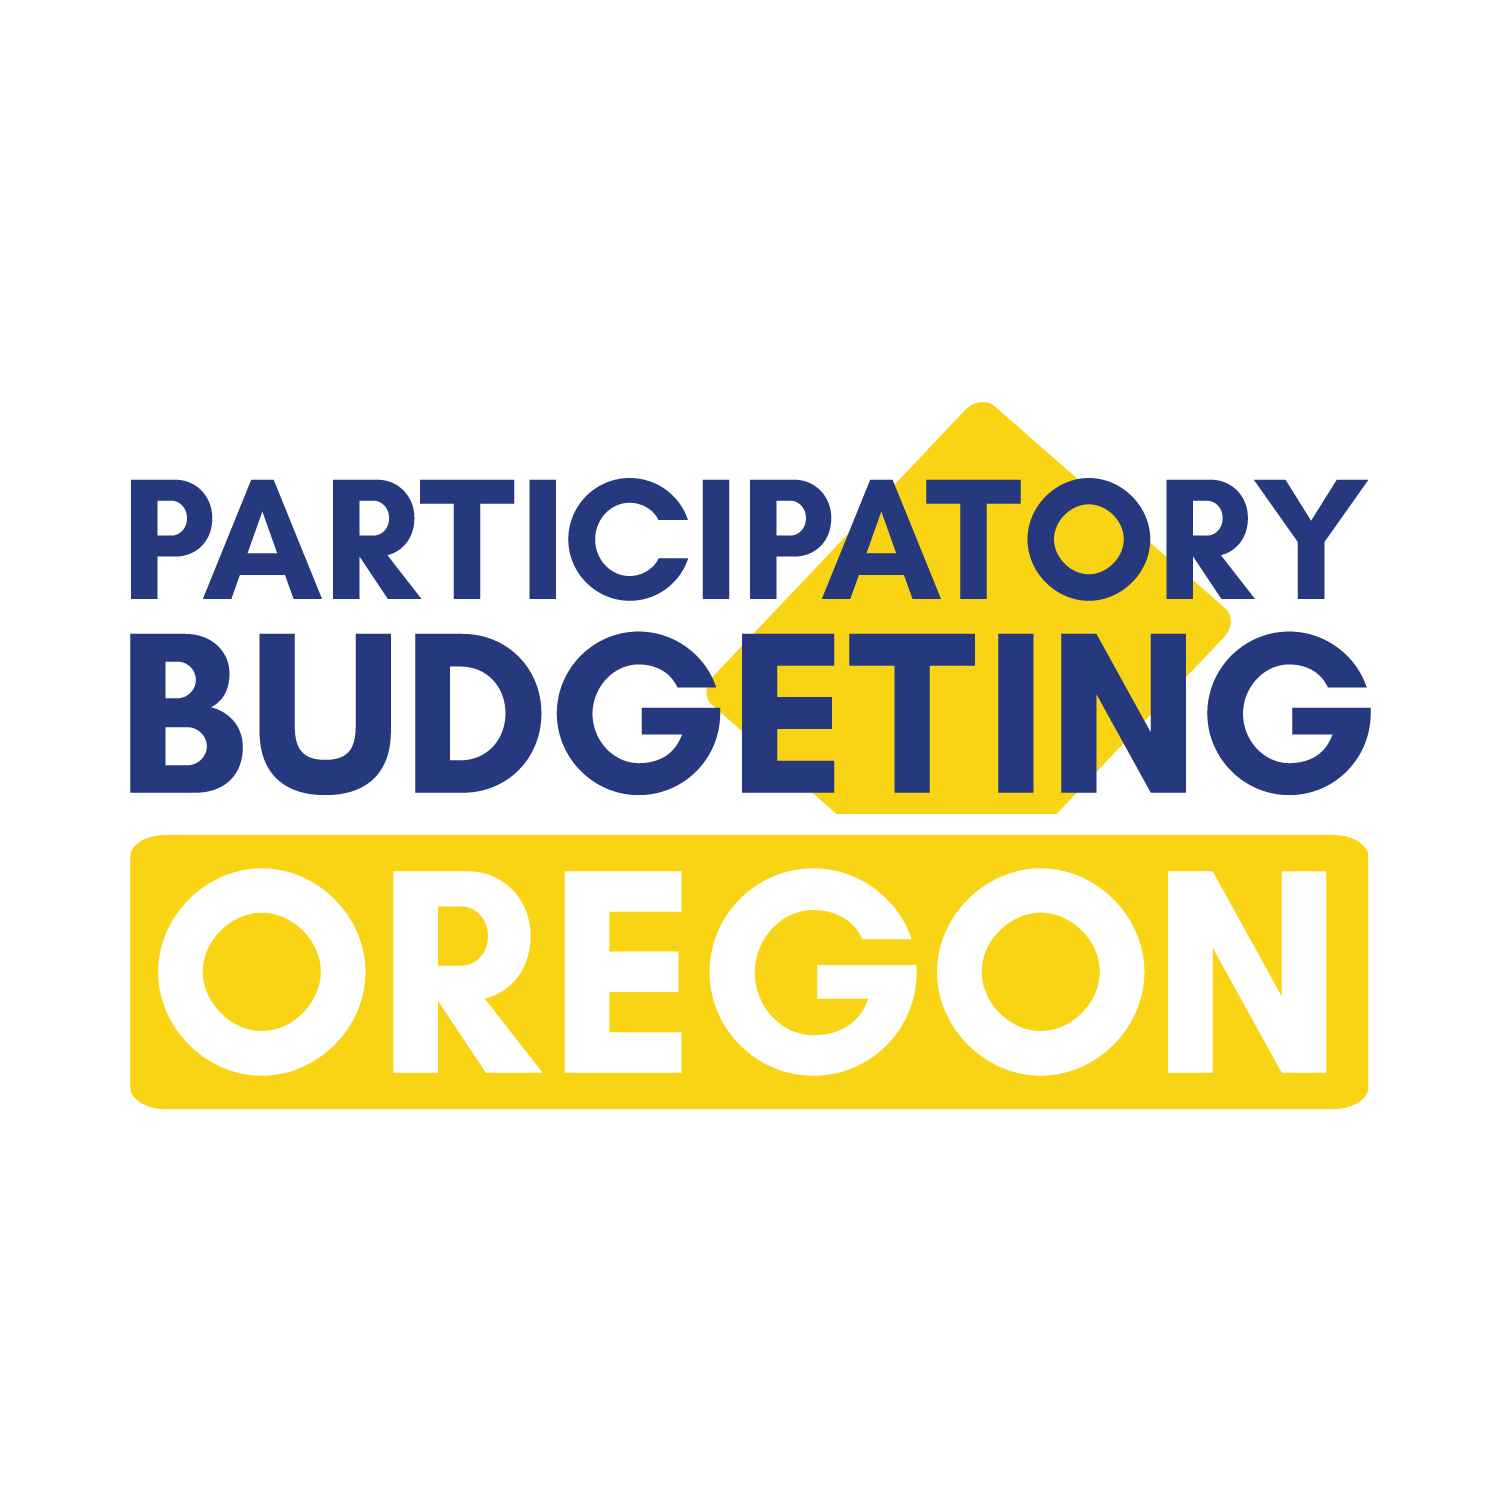 Participatory Budgeting Oregon logo